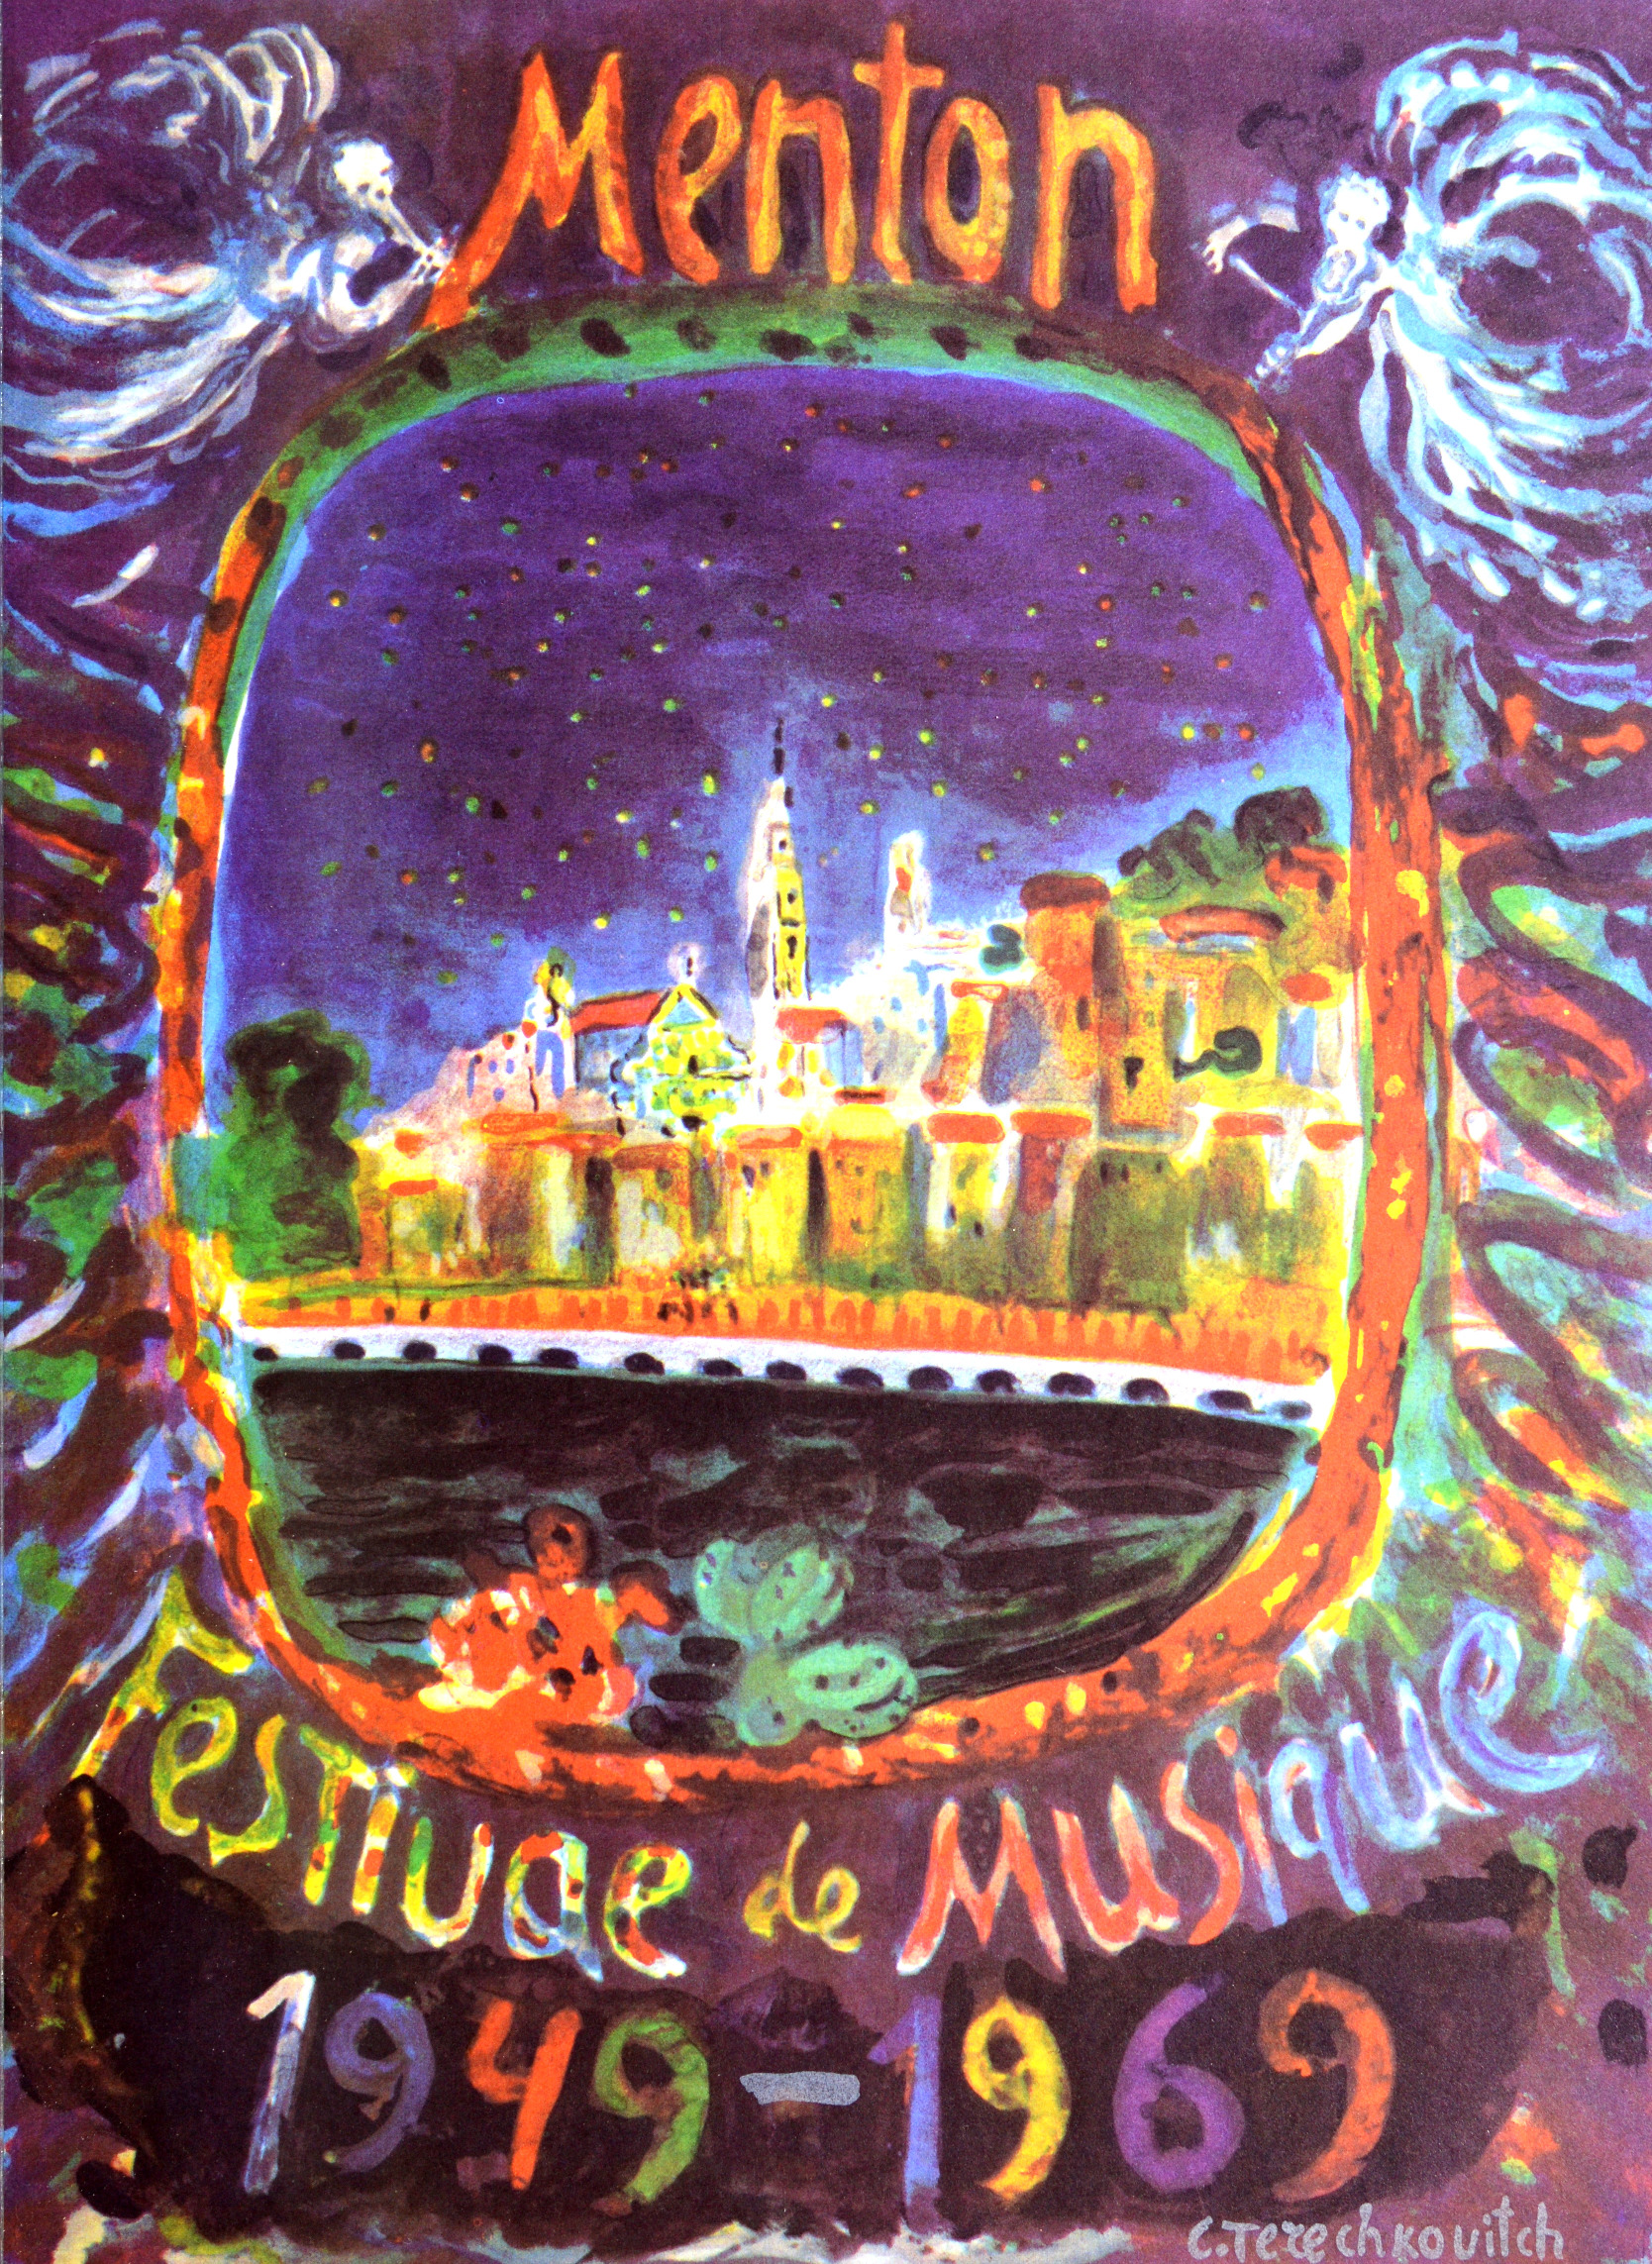 Festival de musique de Menton 1969